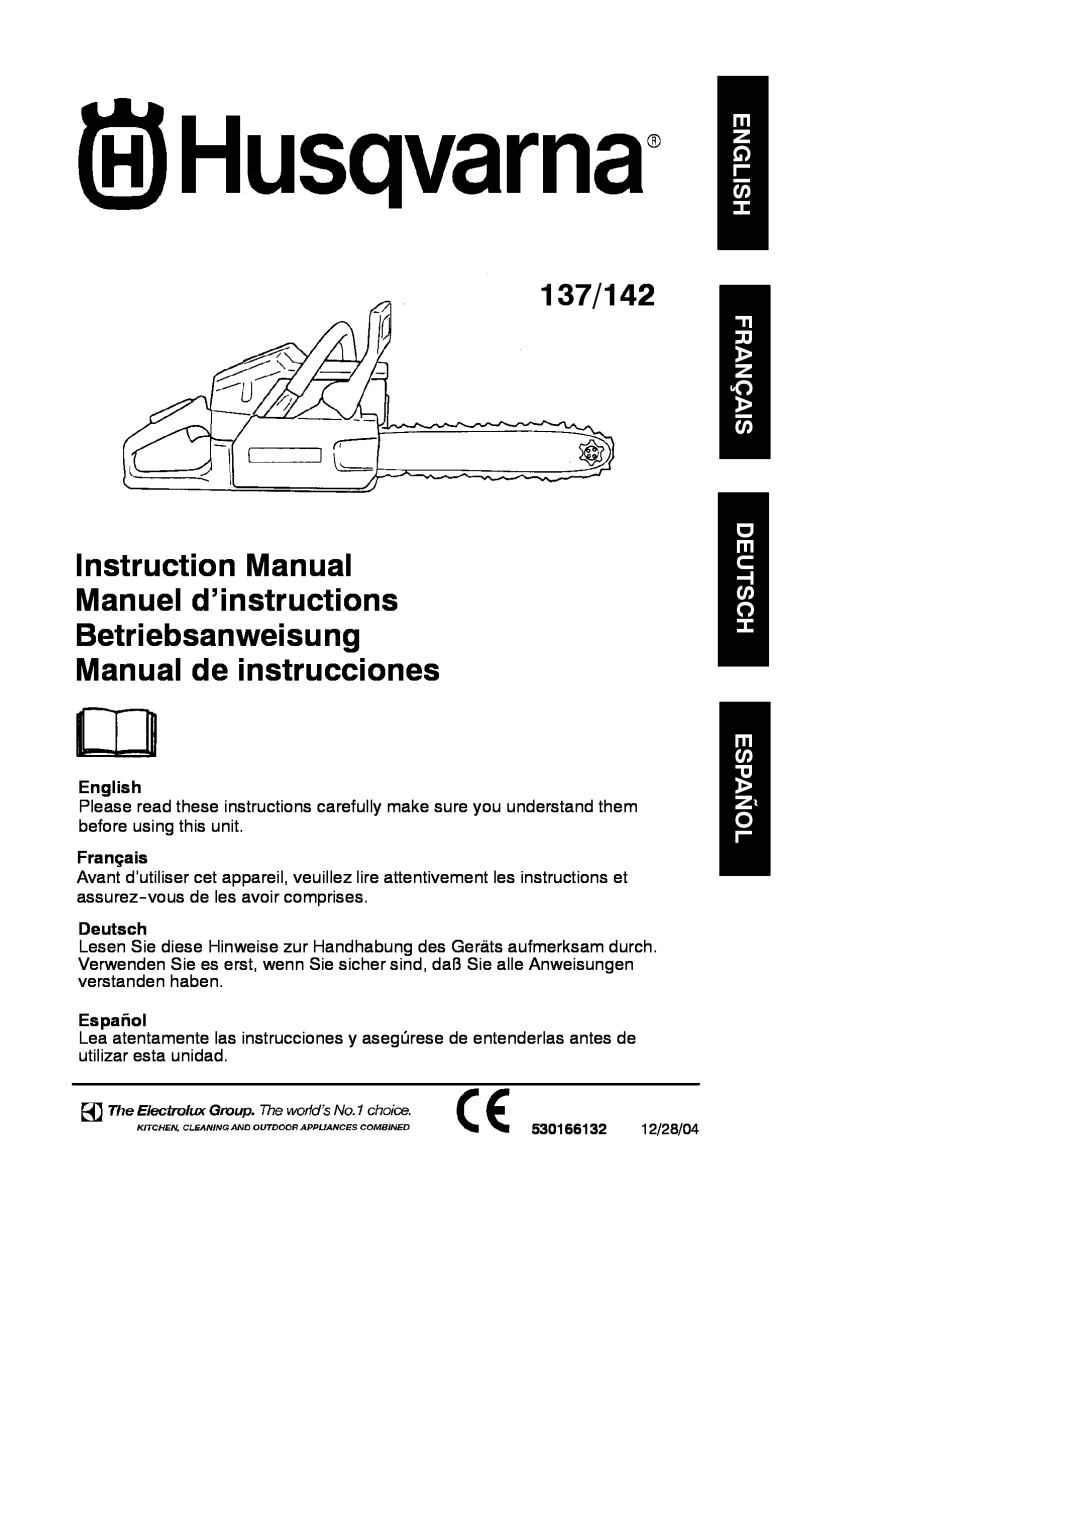 Husqvarna 137, 142 instruction manual 137/142, English Français, Deutsch Español 